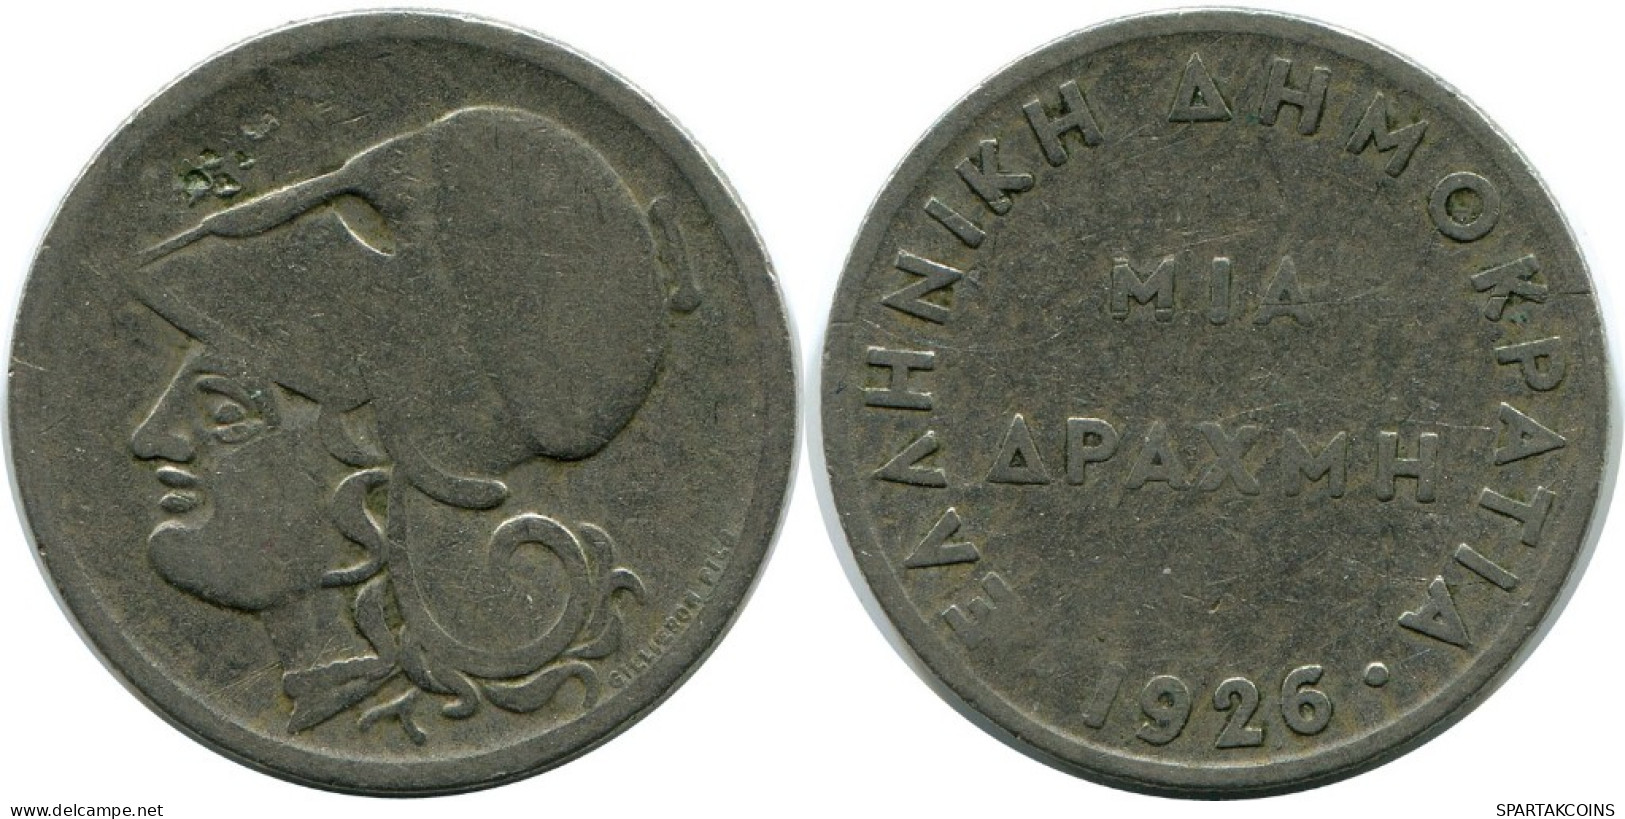 1 DRACHMA 1926 GRECIA GREECE Moneda #AH723.E.A - Griekenland